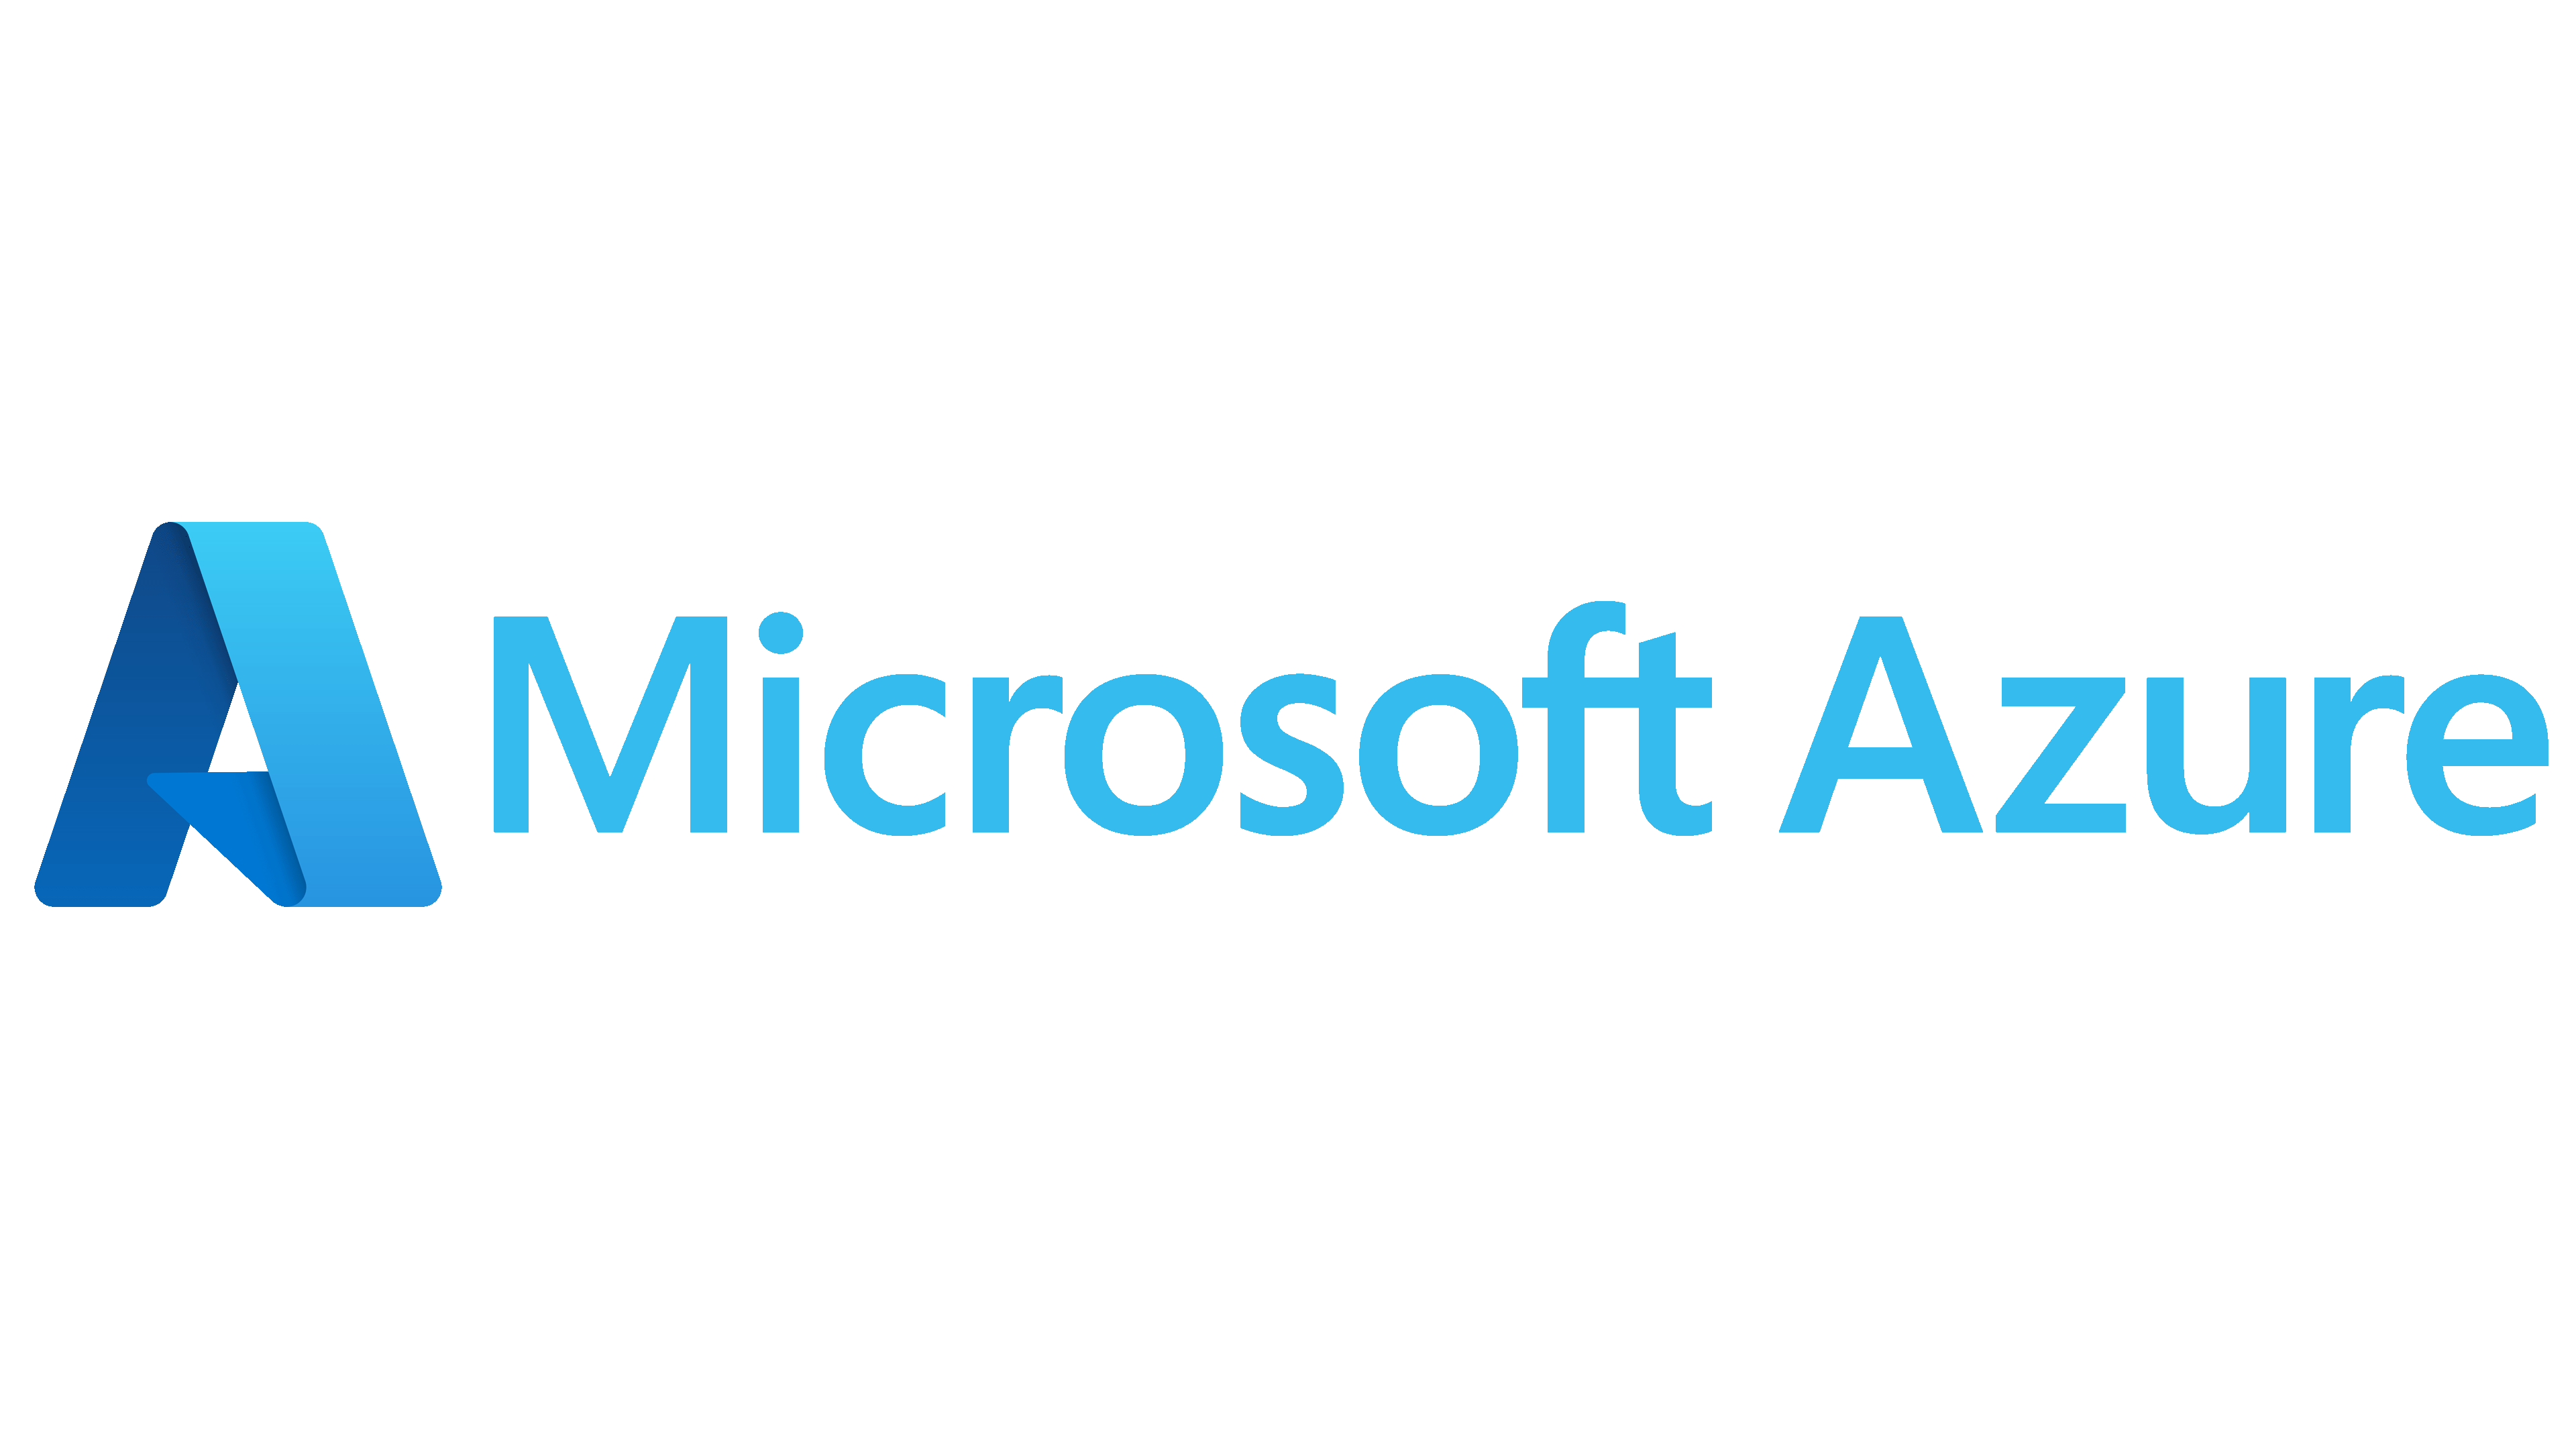 Microsoft-Azure